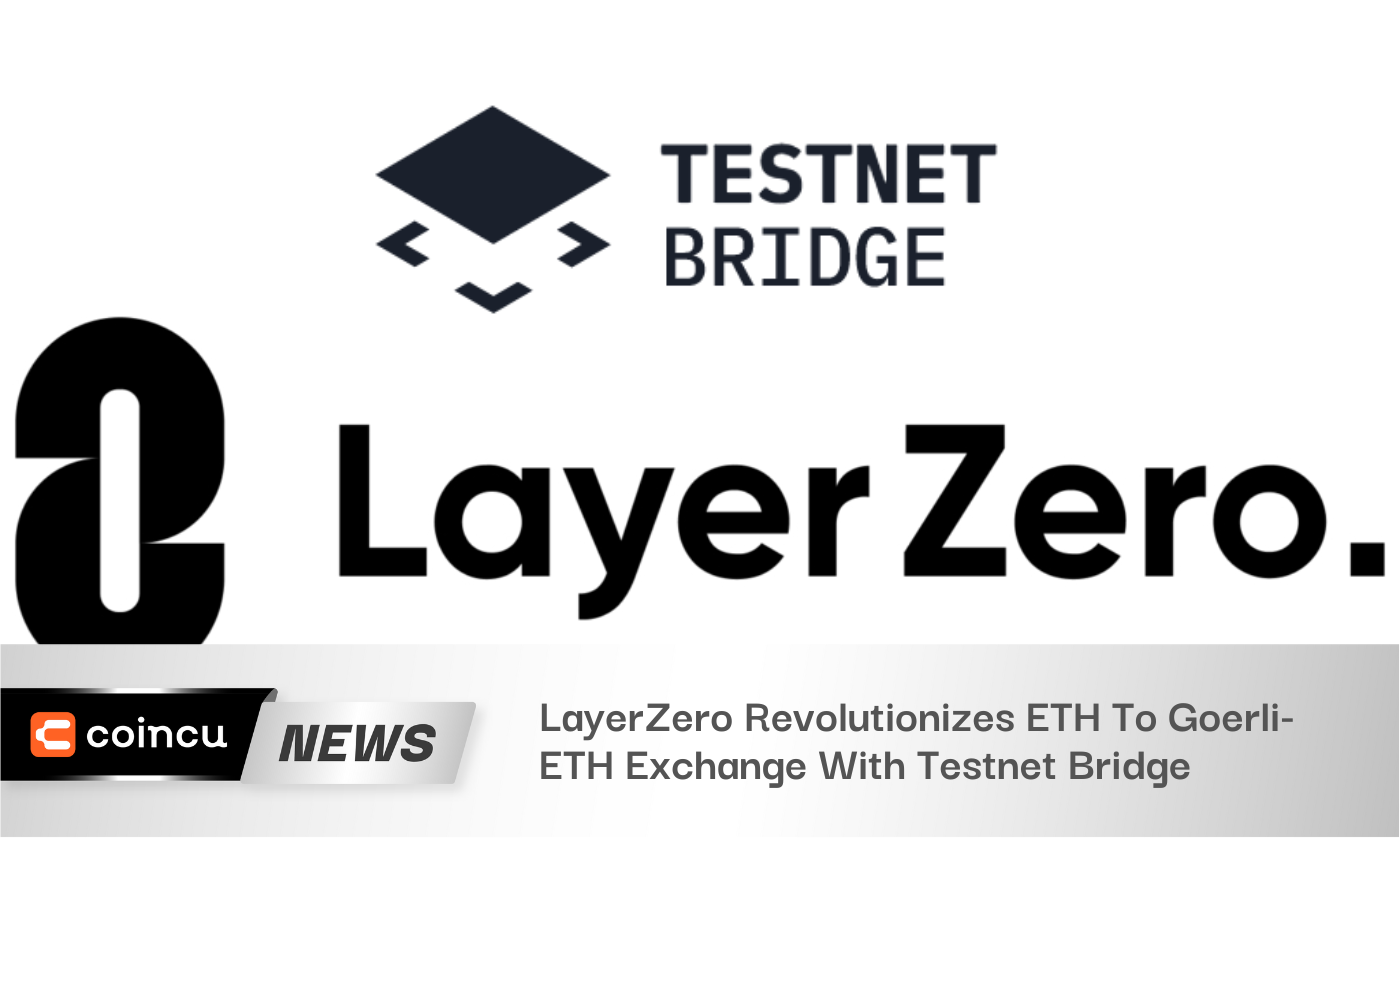 LayerZero Revolutionizes ETH To Goerli-ETH Exchange With Testnet Bridge